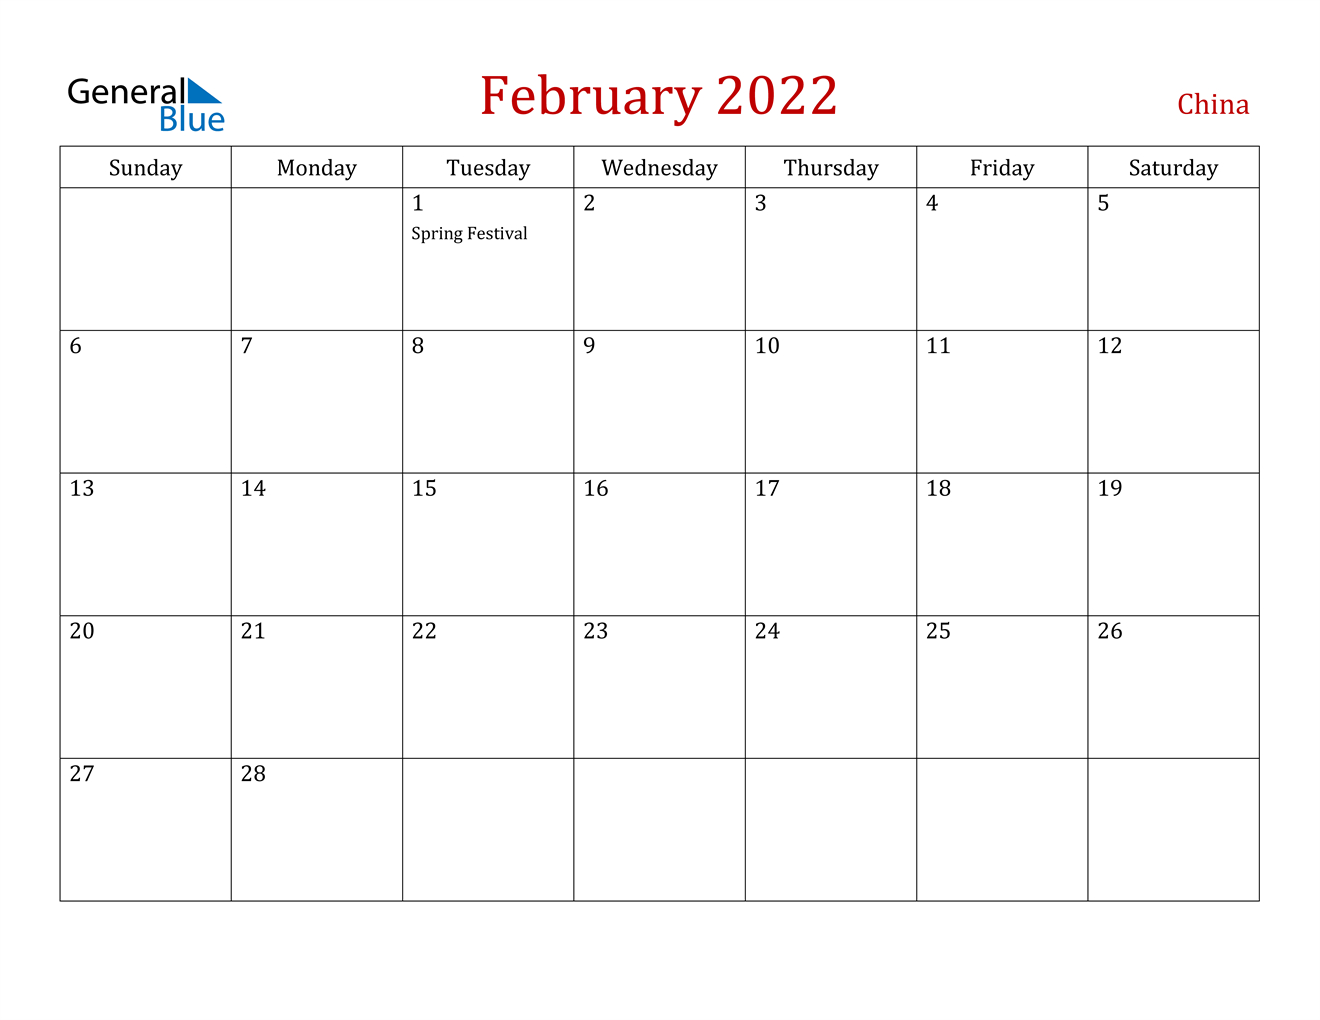 February 2022 Calendar - China